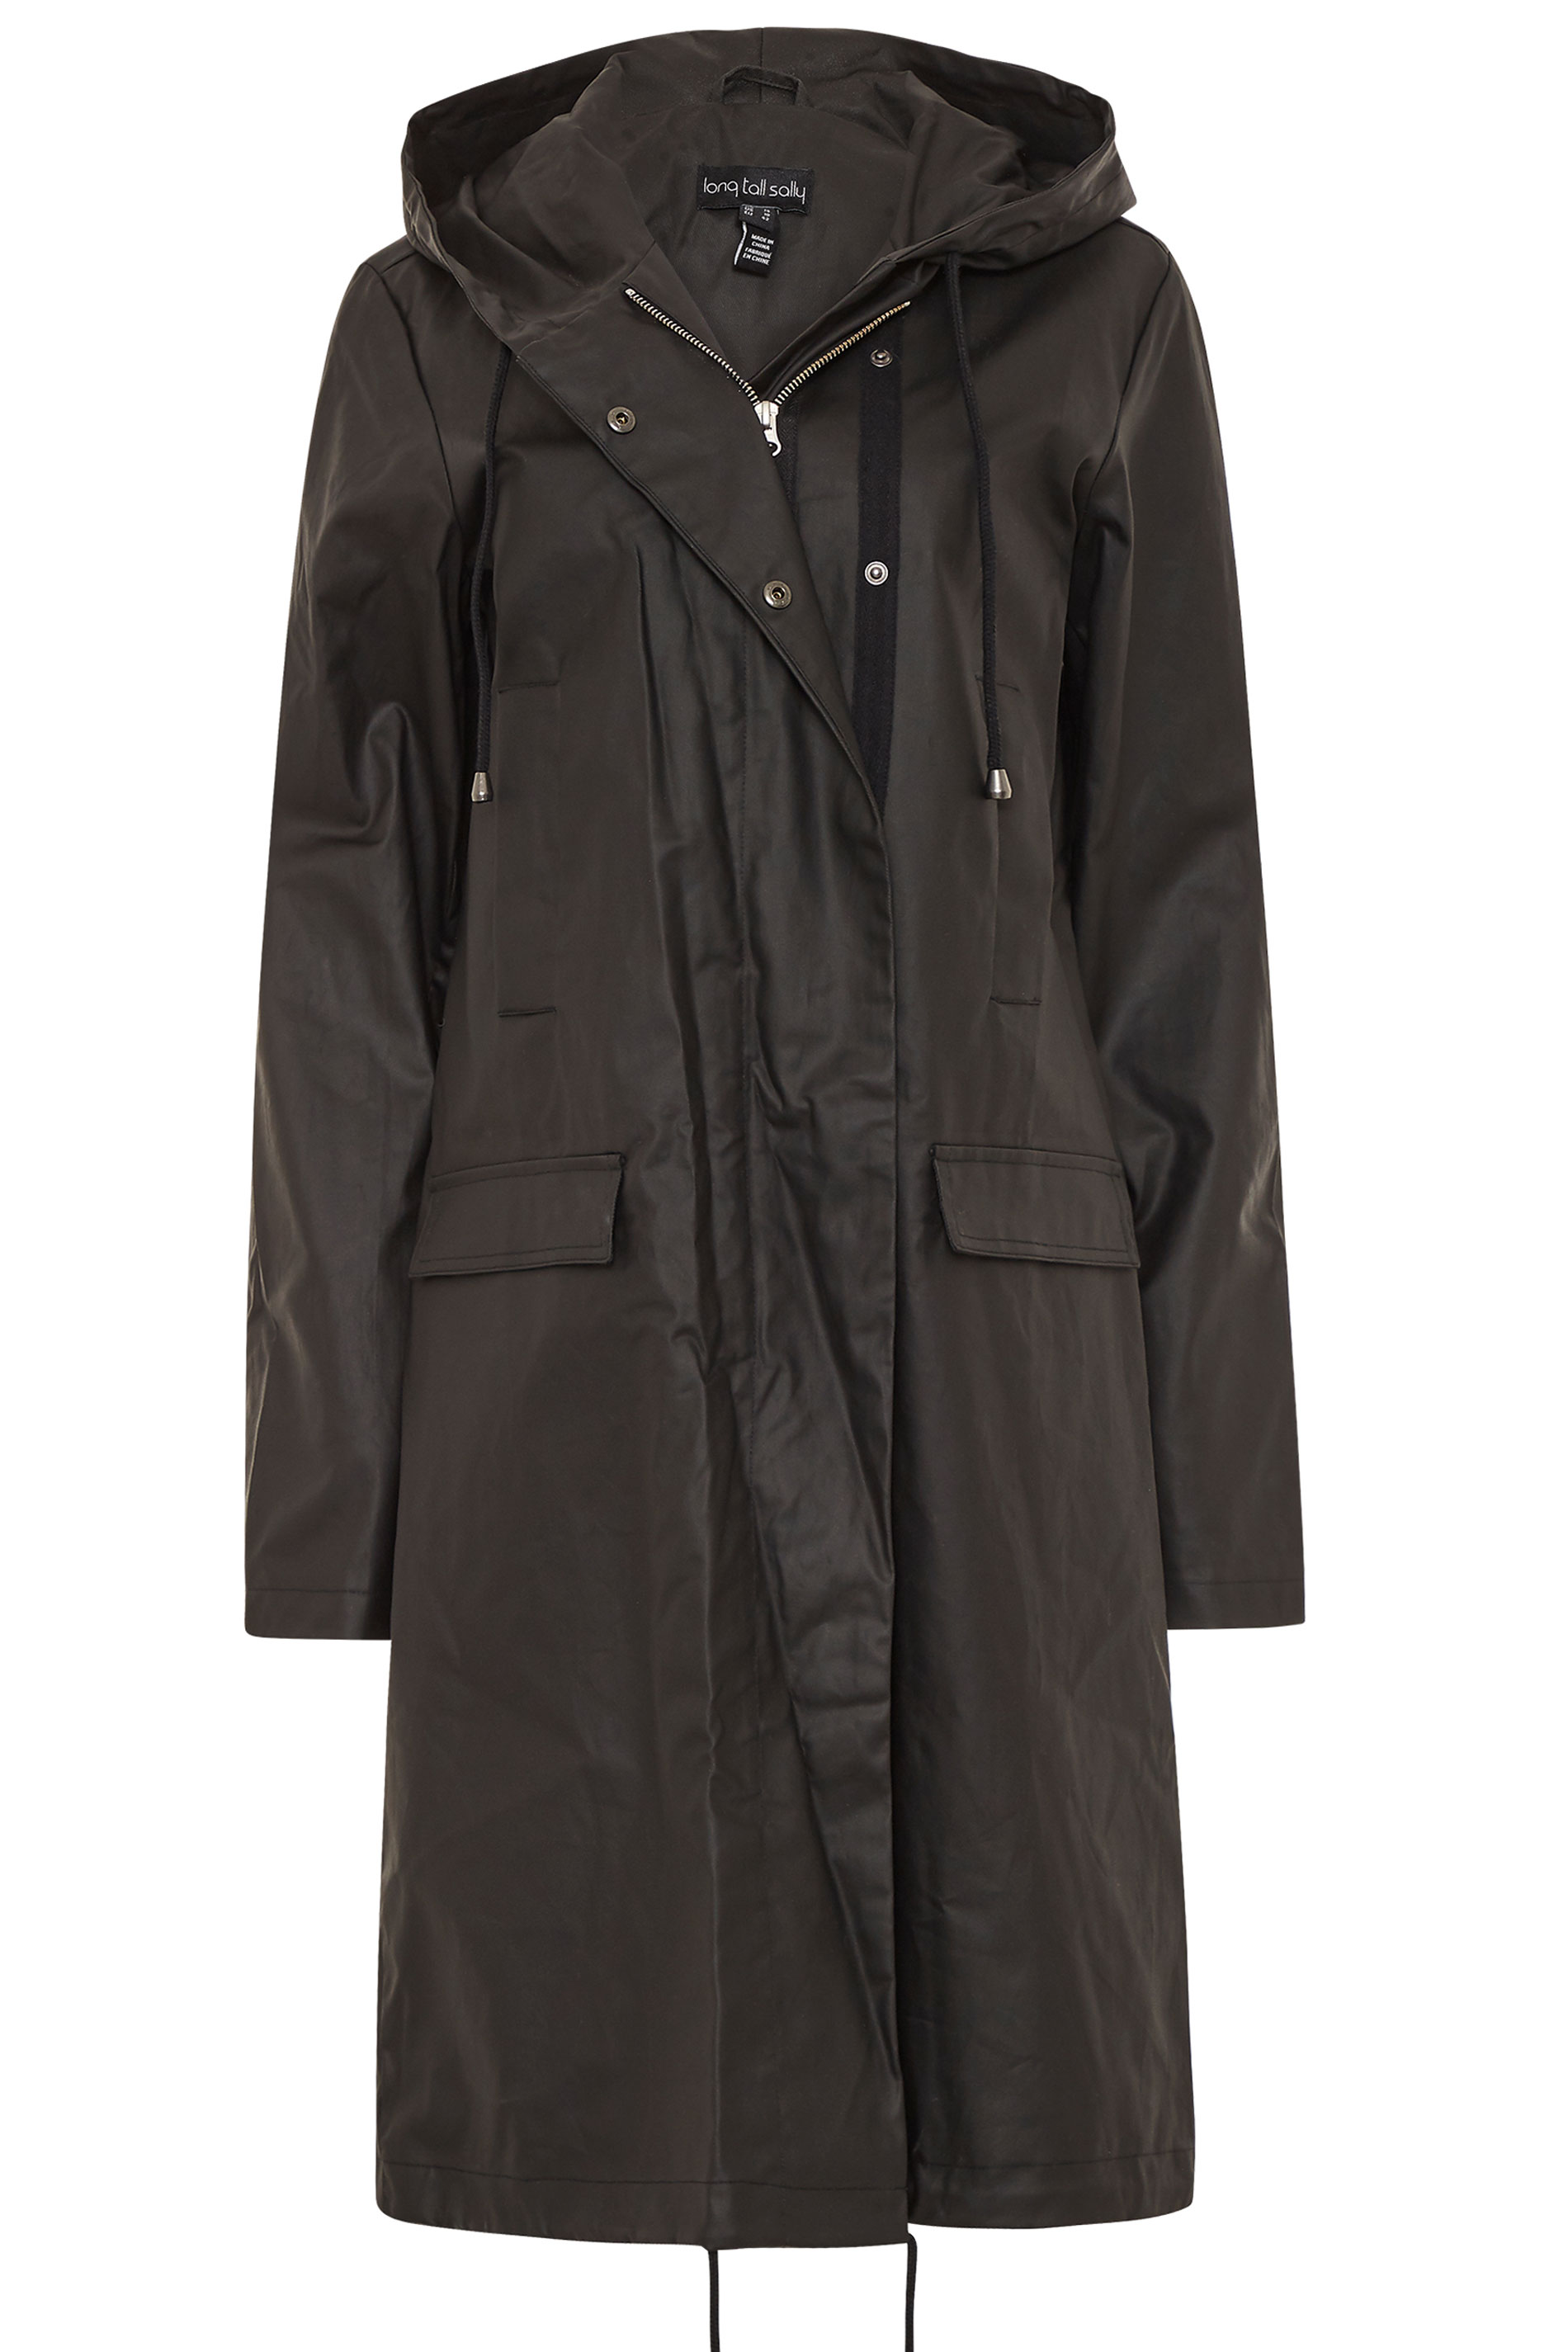 Black Longline Showerproof Raincoat | Long Tall Sally